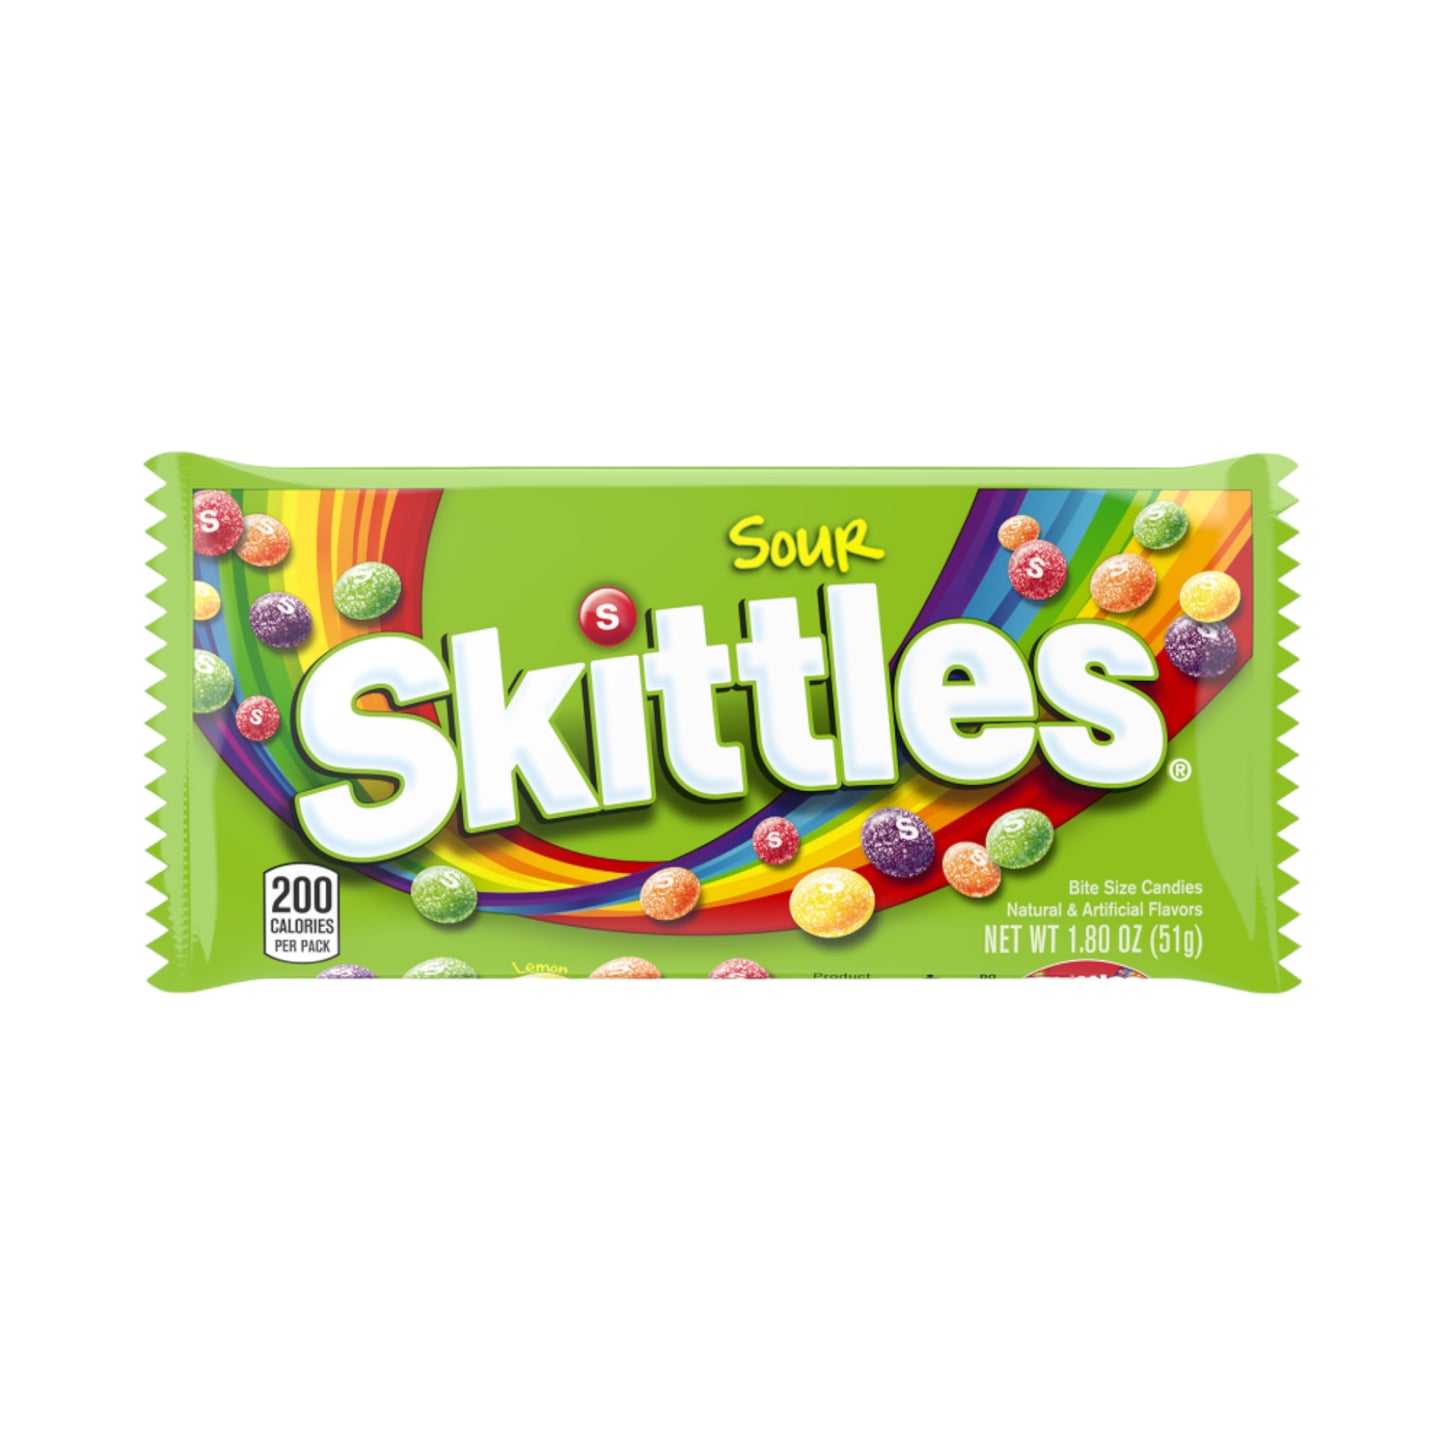 Skittles Sour Candy 1.8oz (51g) - (USA)